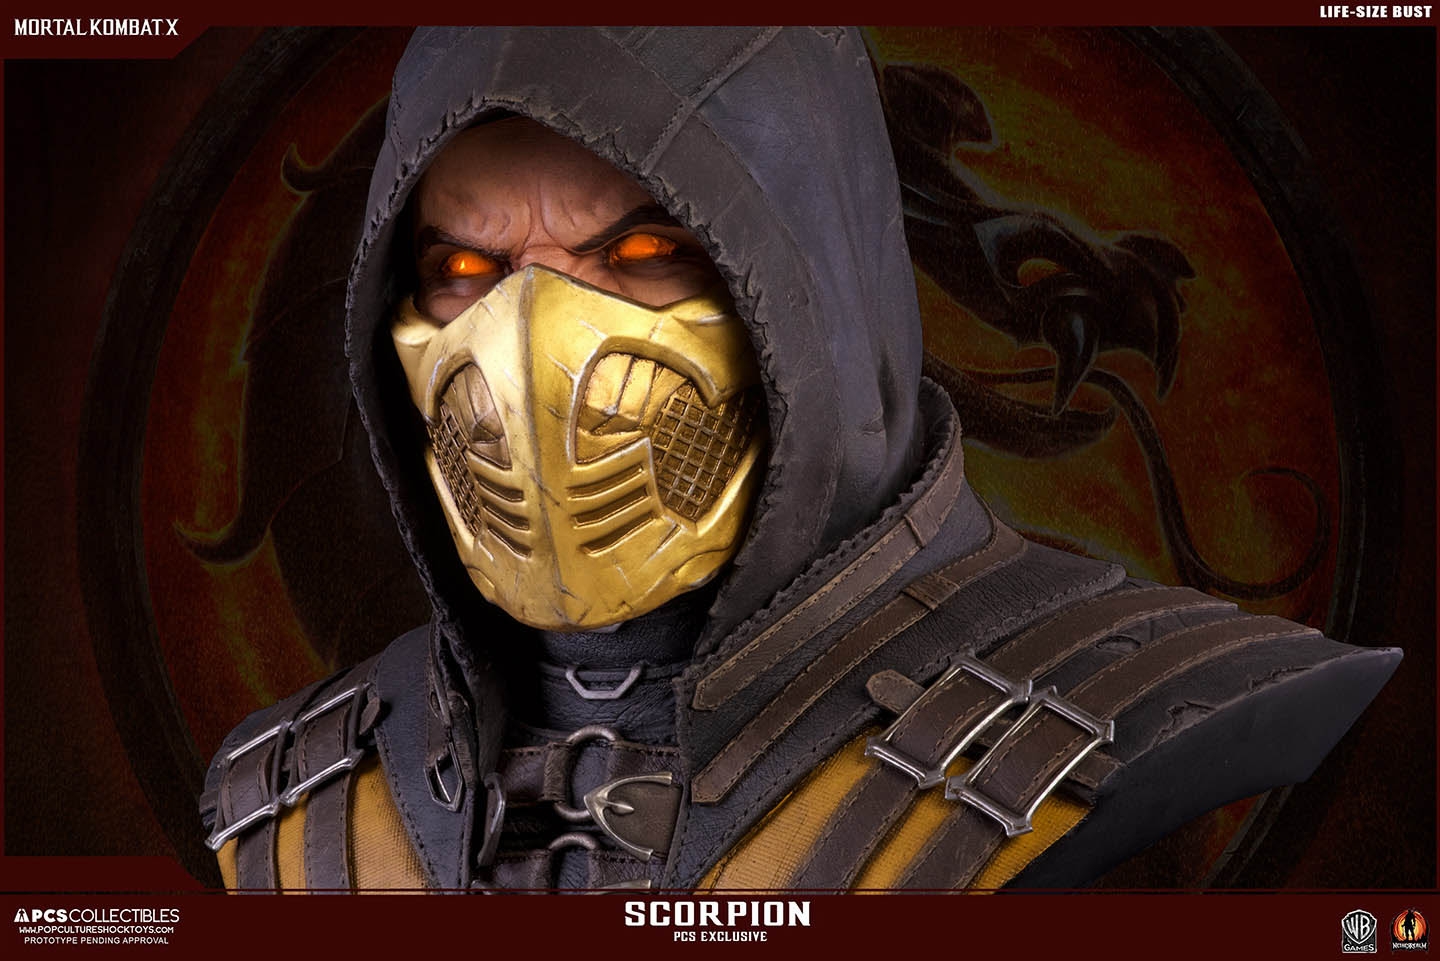 Scorpion-Bust-Pop-culture-Shock-Mortal-Kombat-X-exclusive-003.jpg